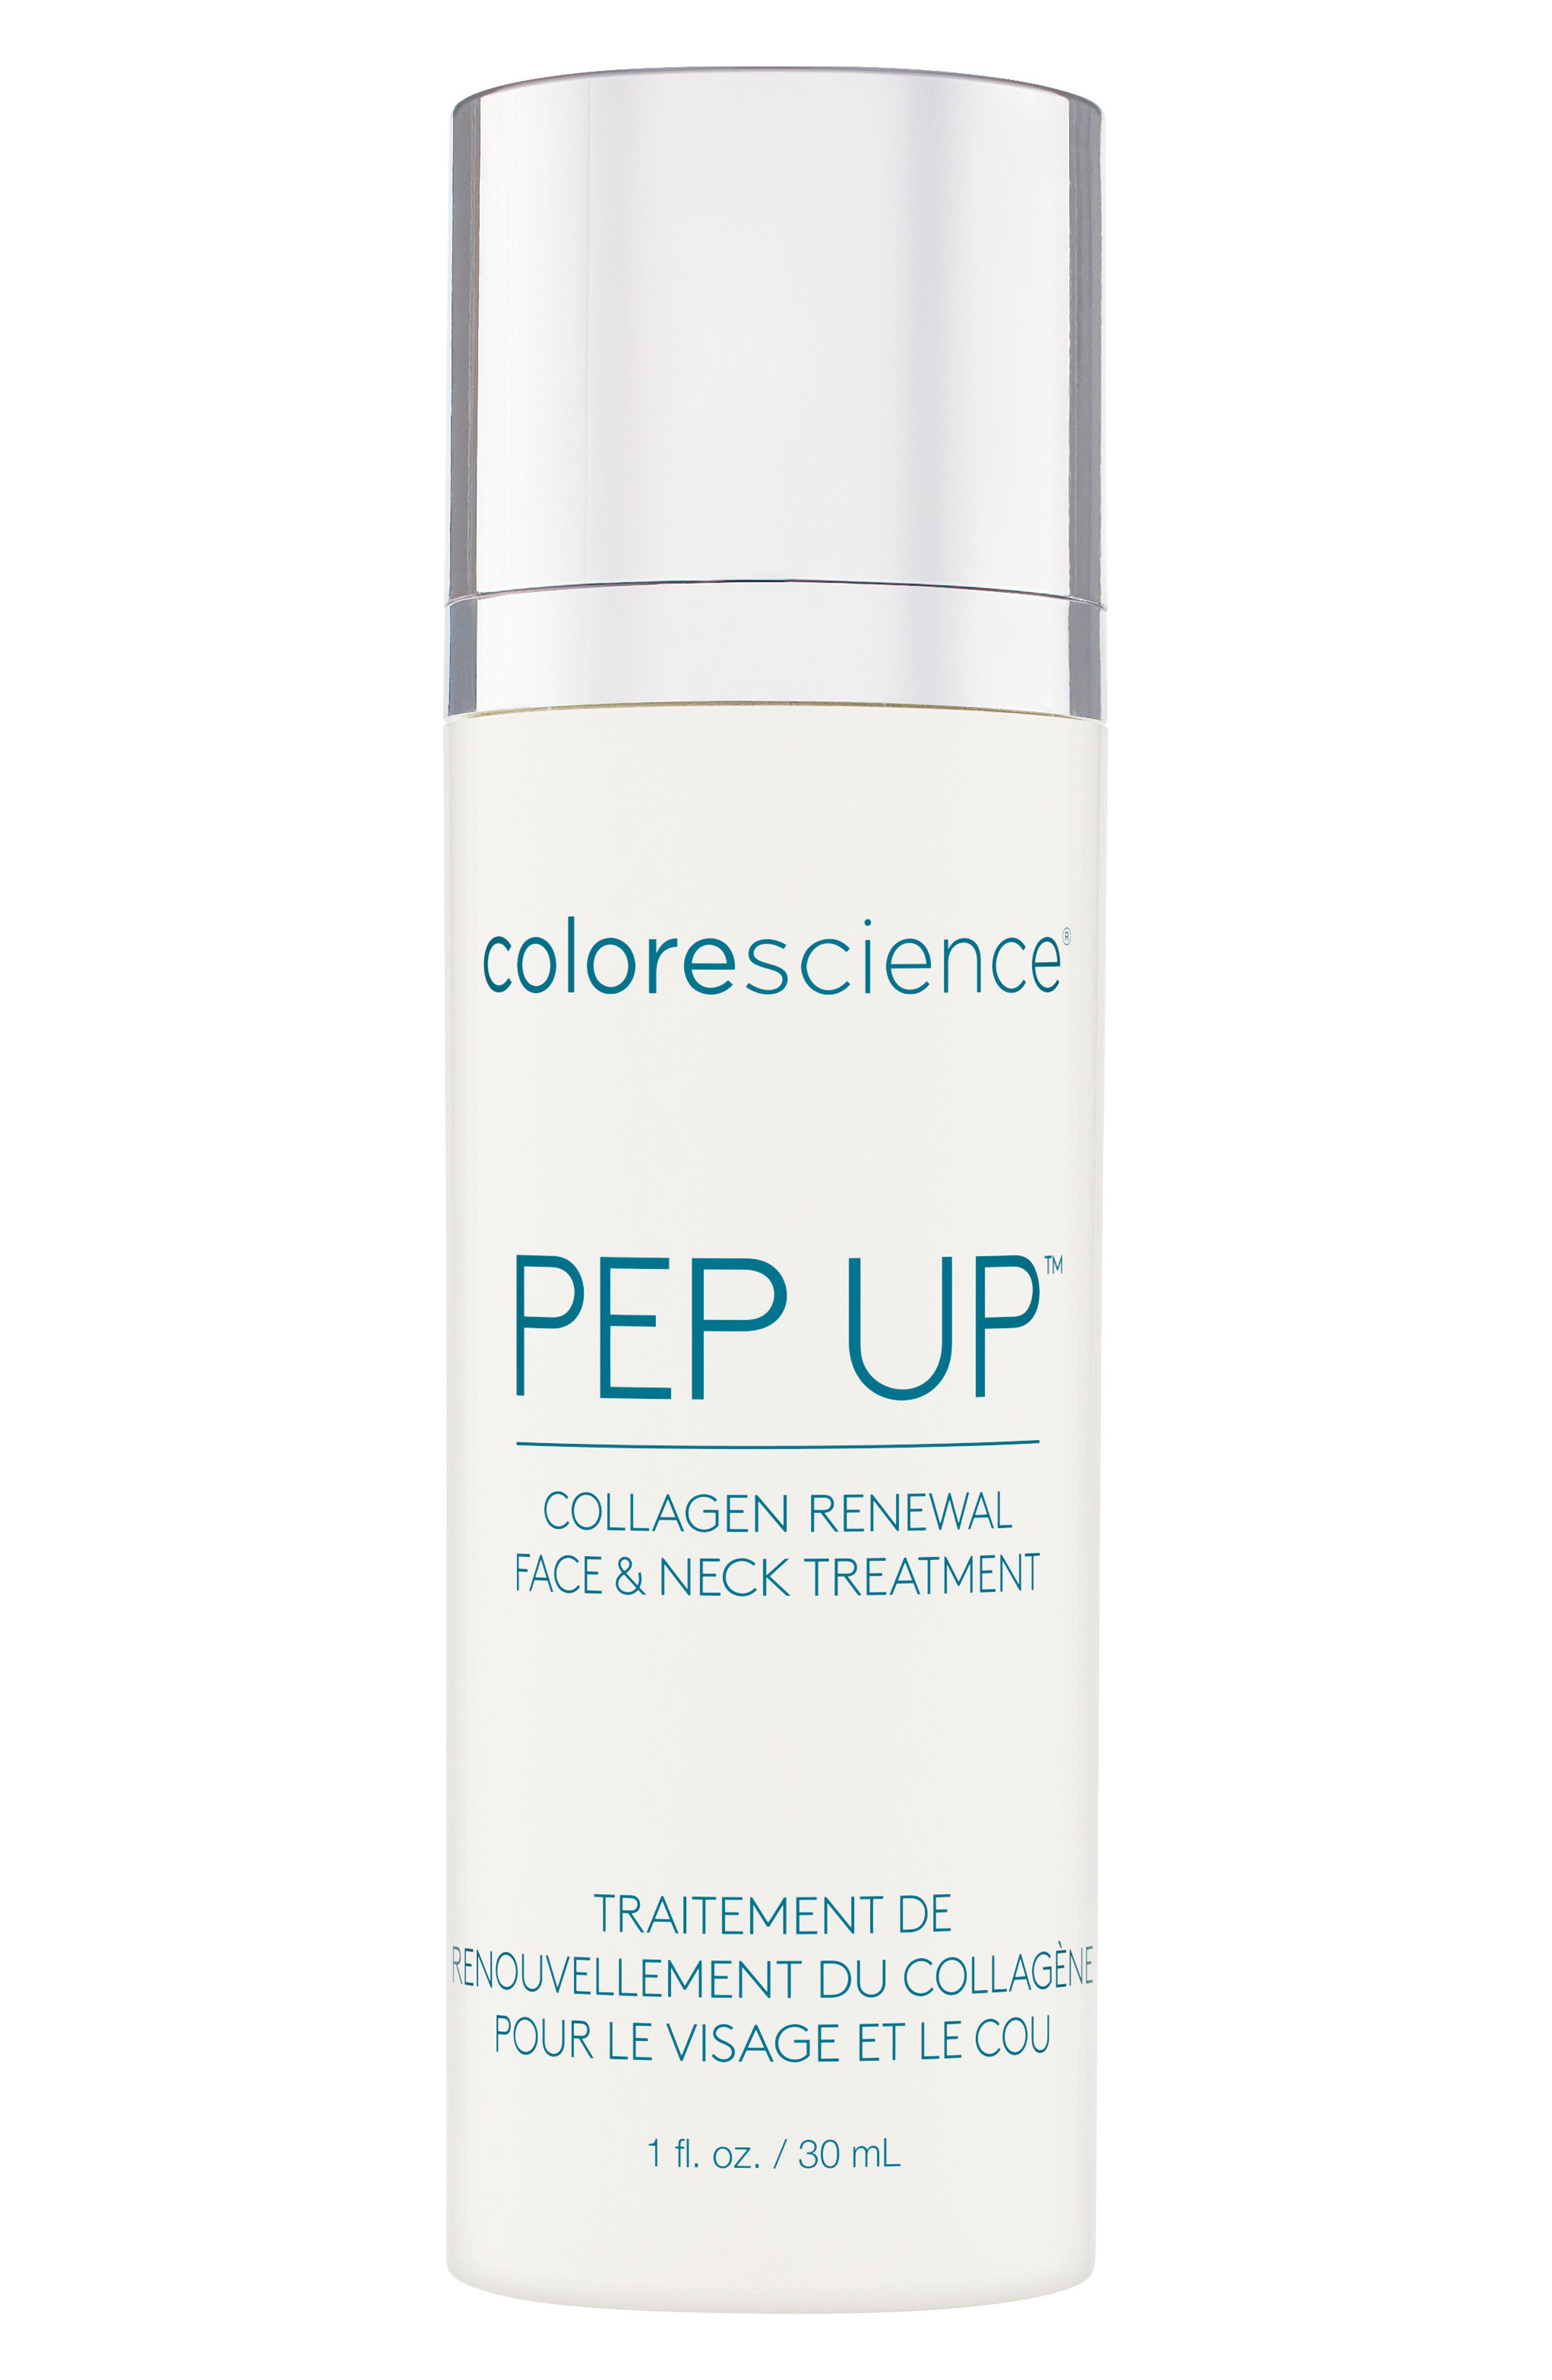 Colorescience Pep Up Collagen Renewal Face & Neck Treatment